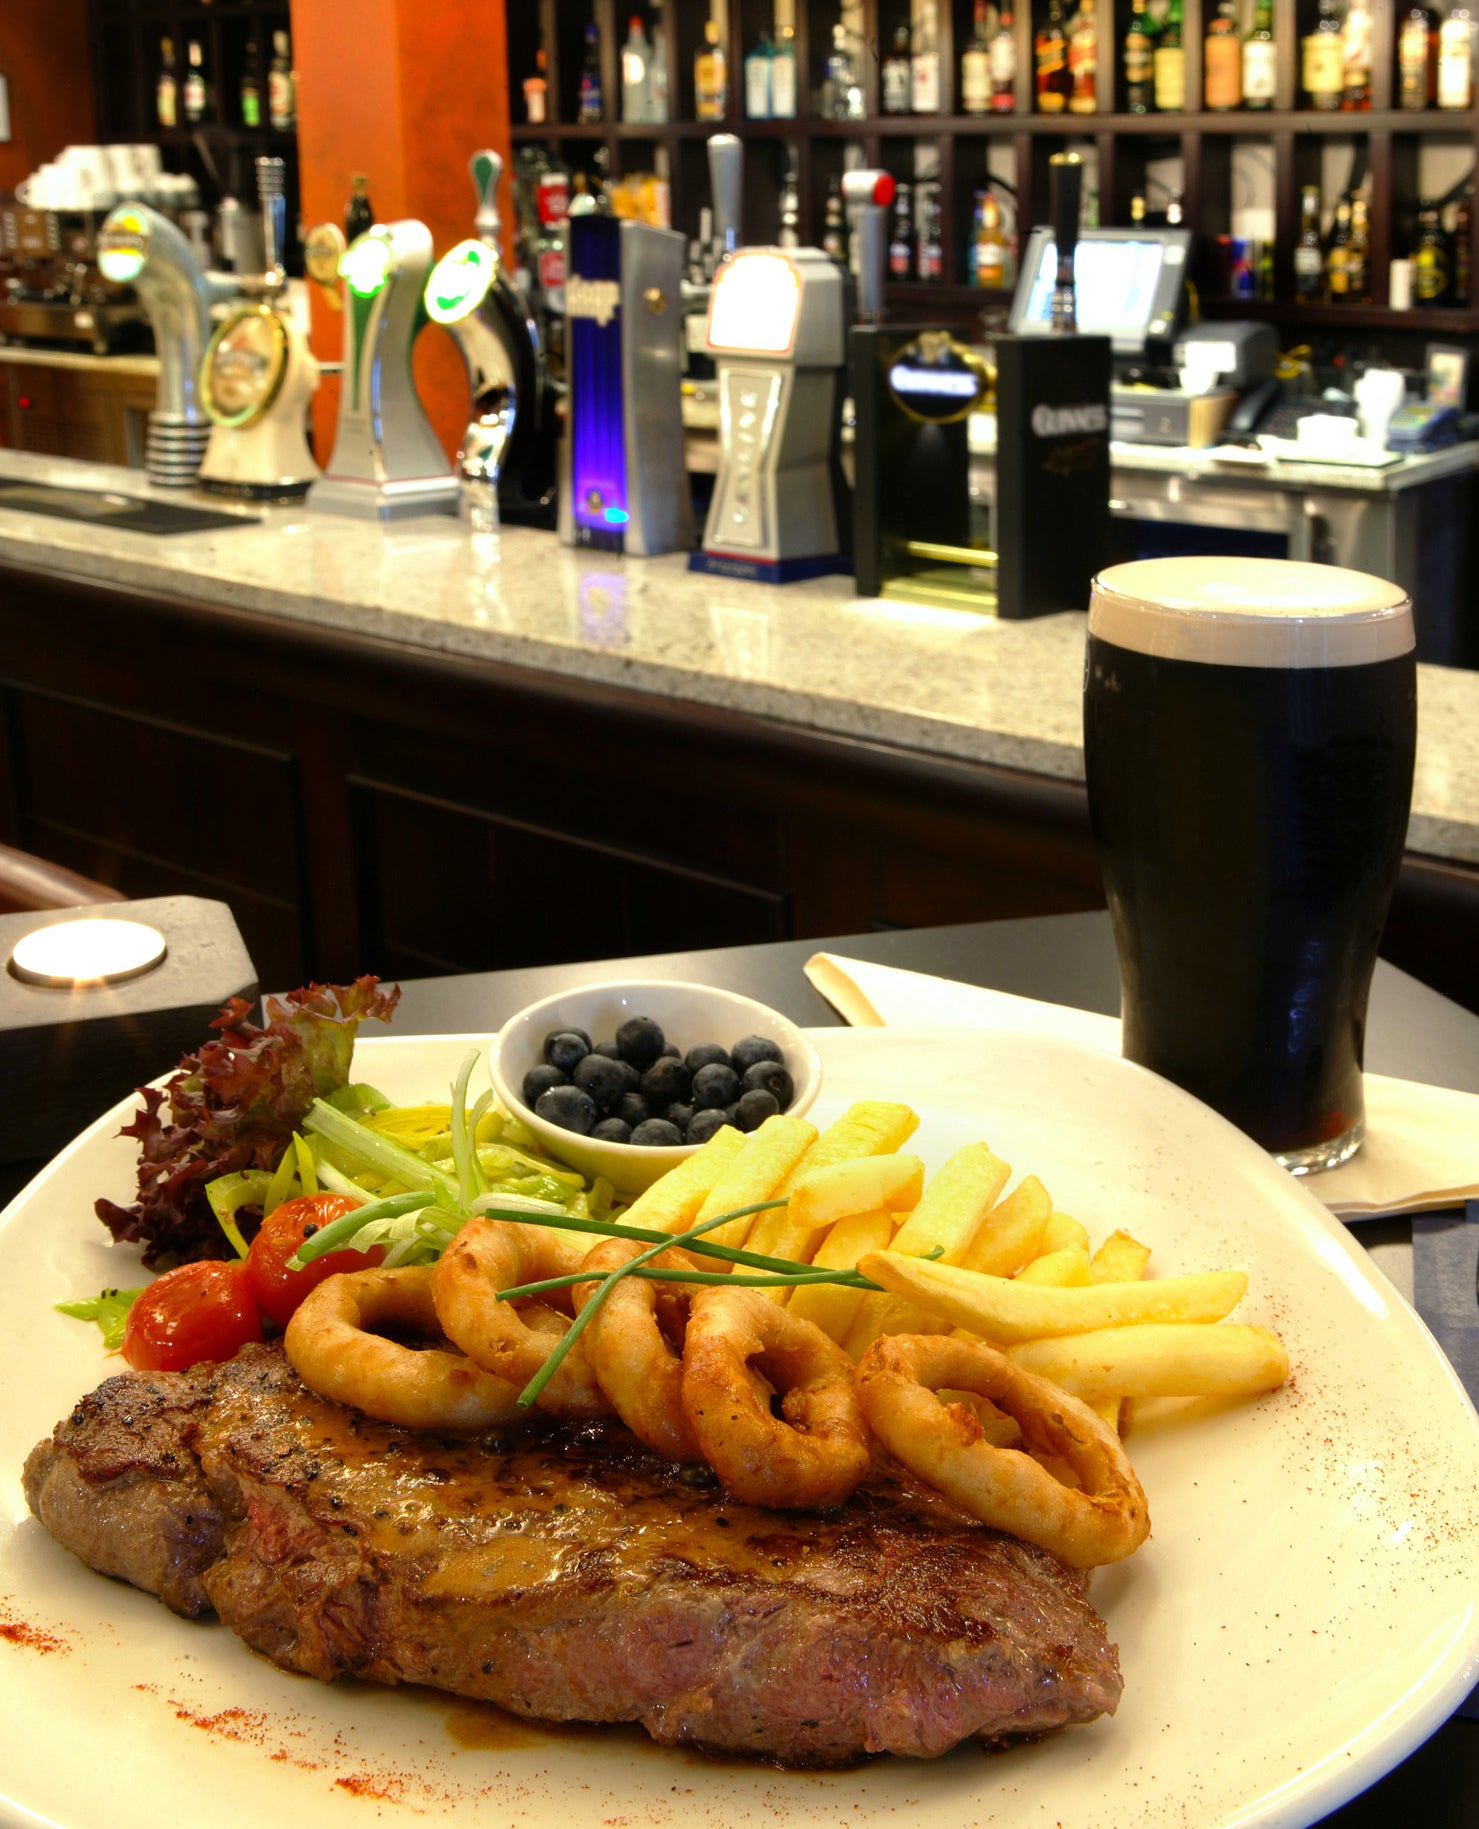 A pint of Guinness next to a steak dinner.